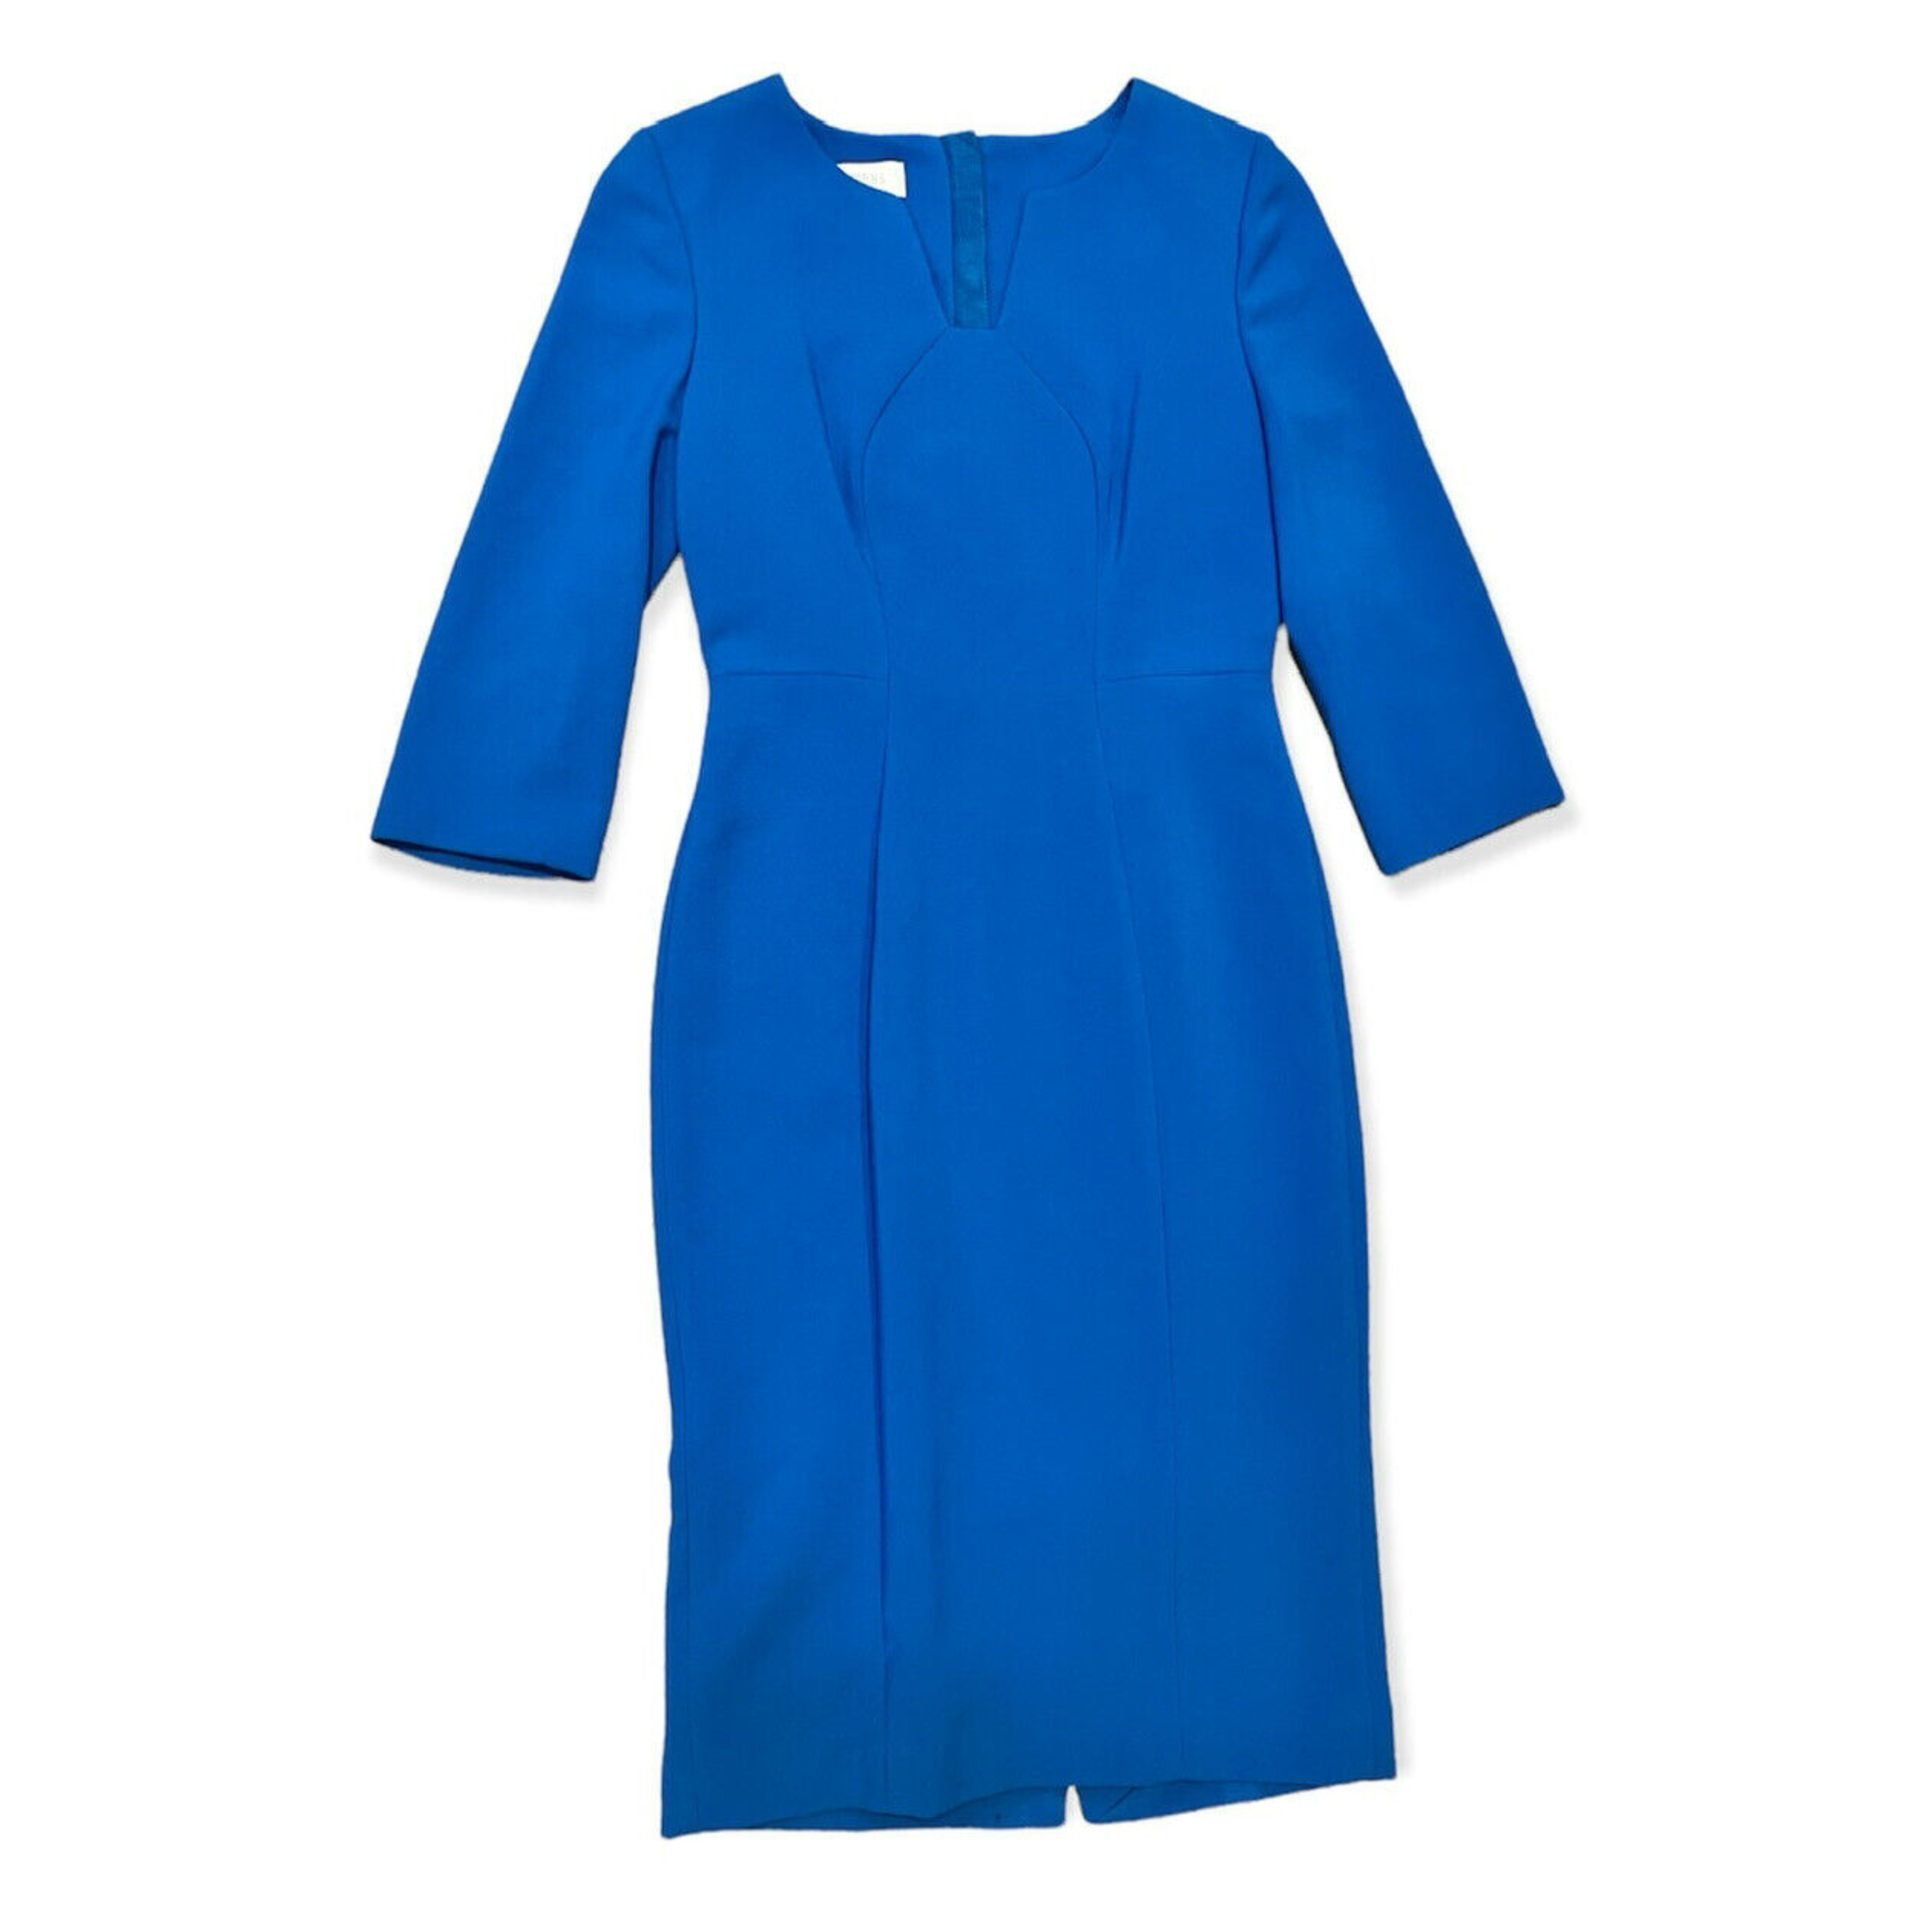 hobbs london ladies dress size 6 RRP £139